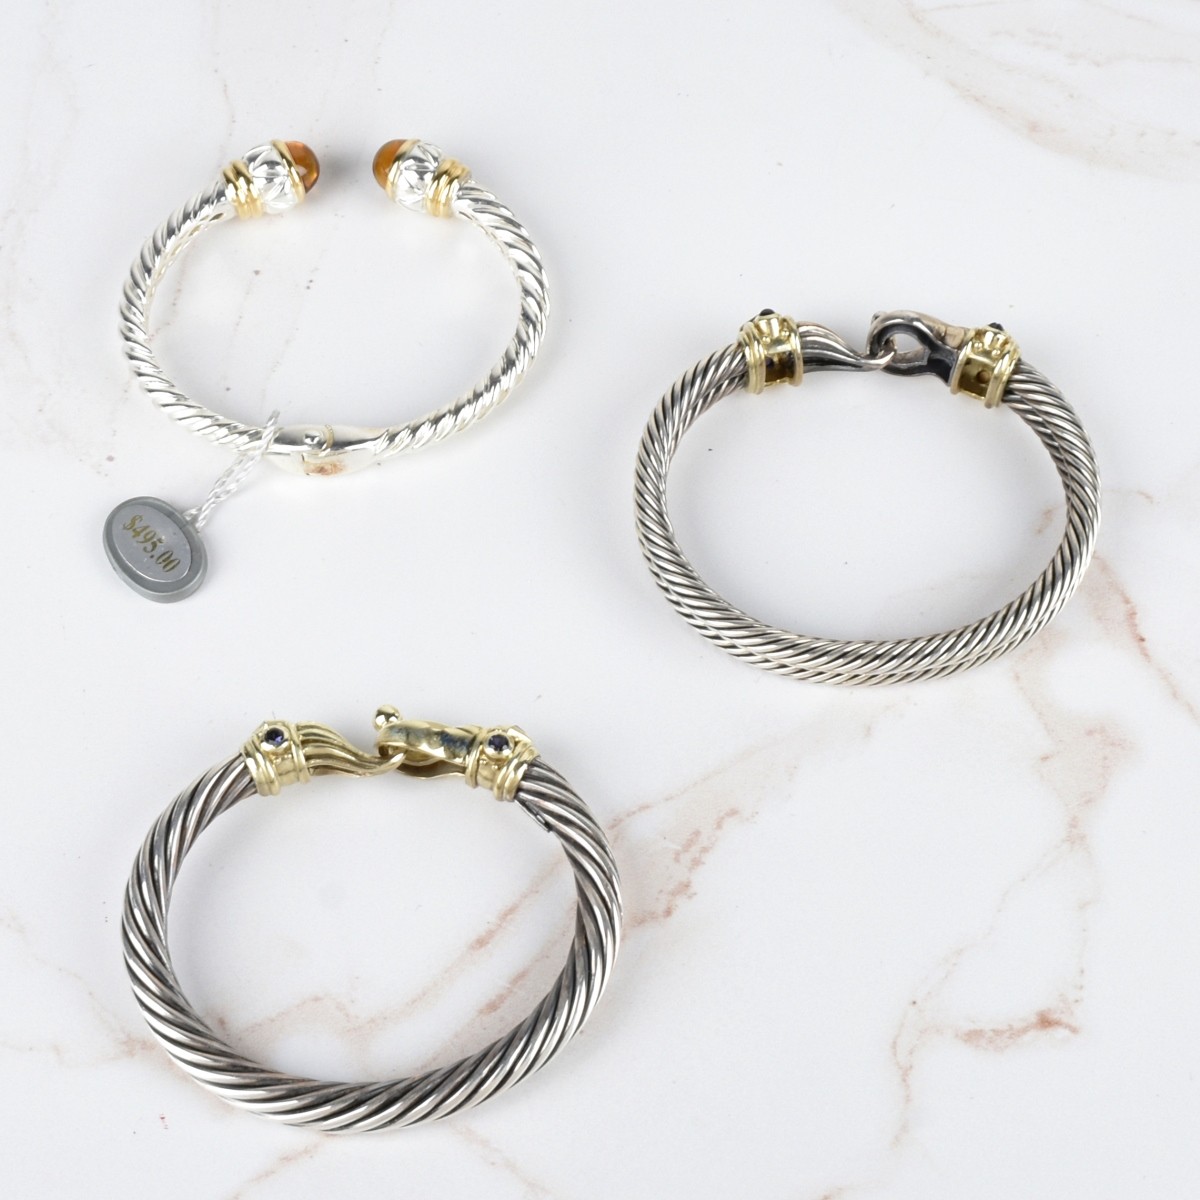 Gemstone, Gold and Silver Bangle Bracelets